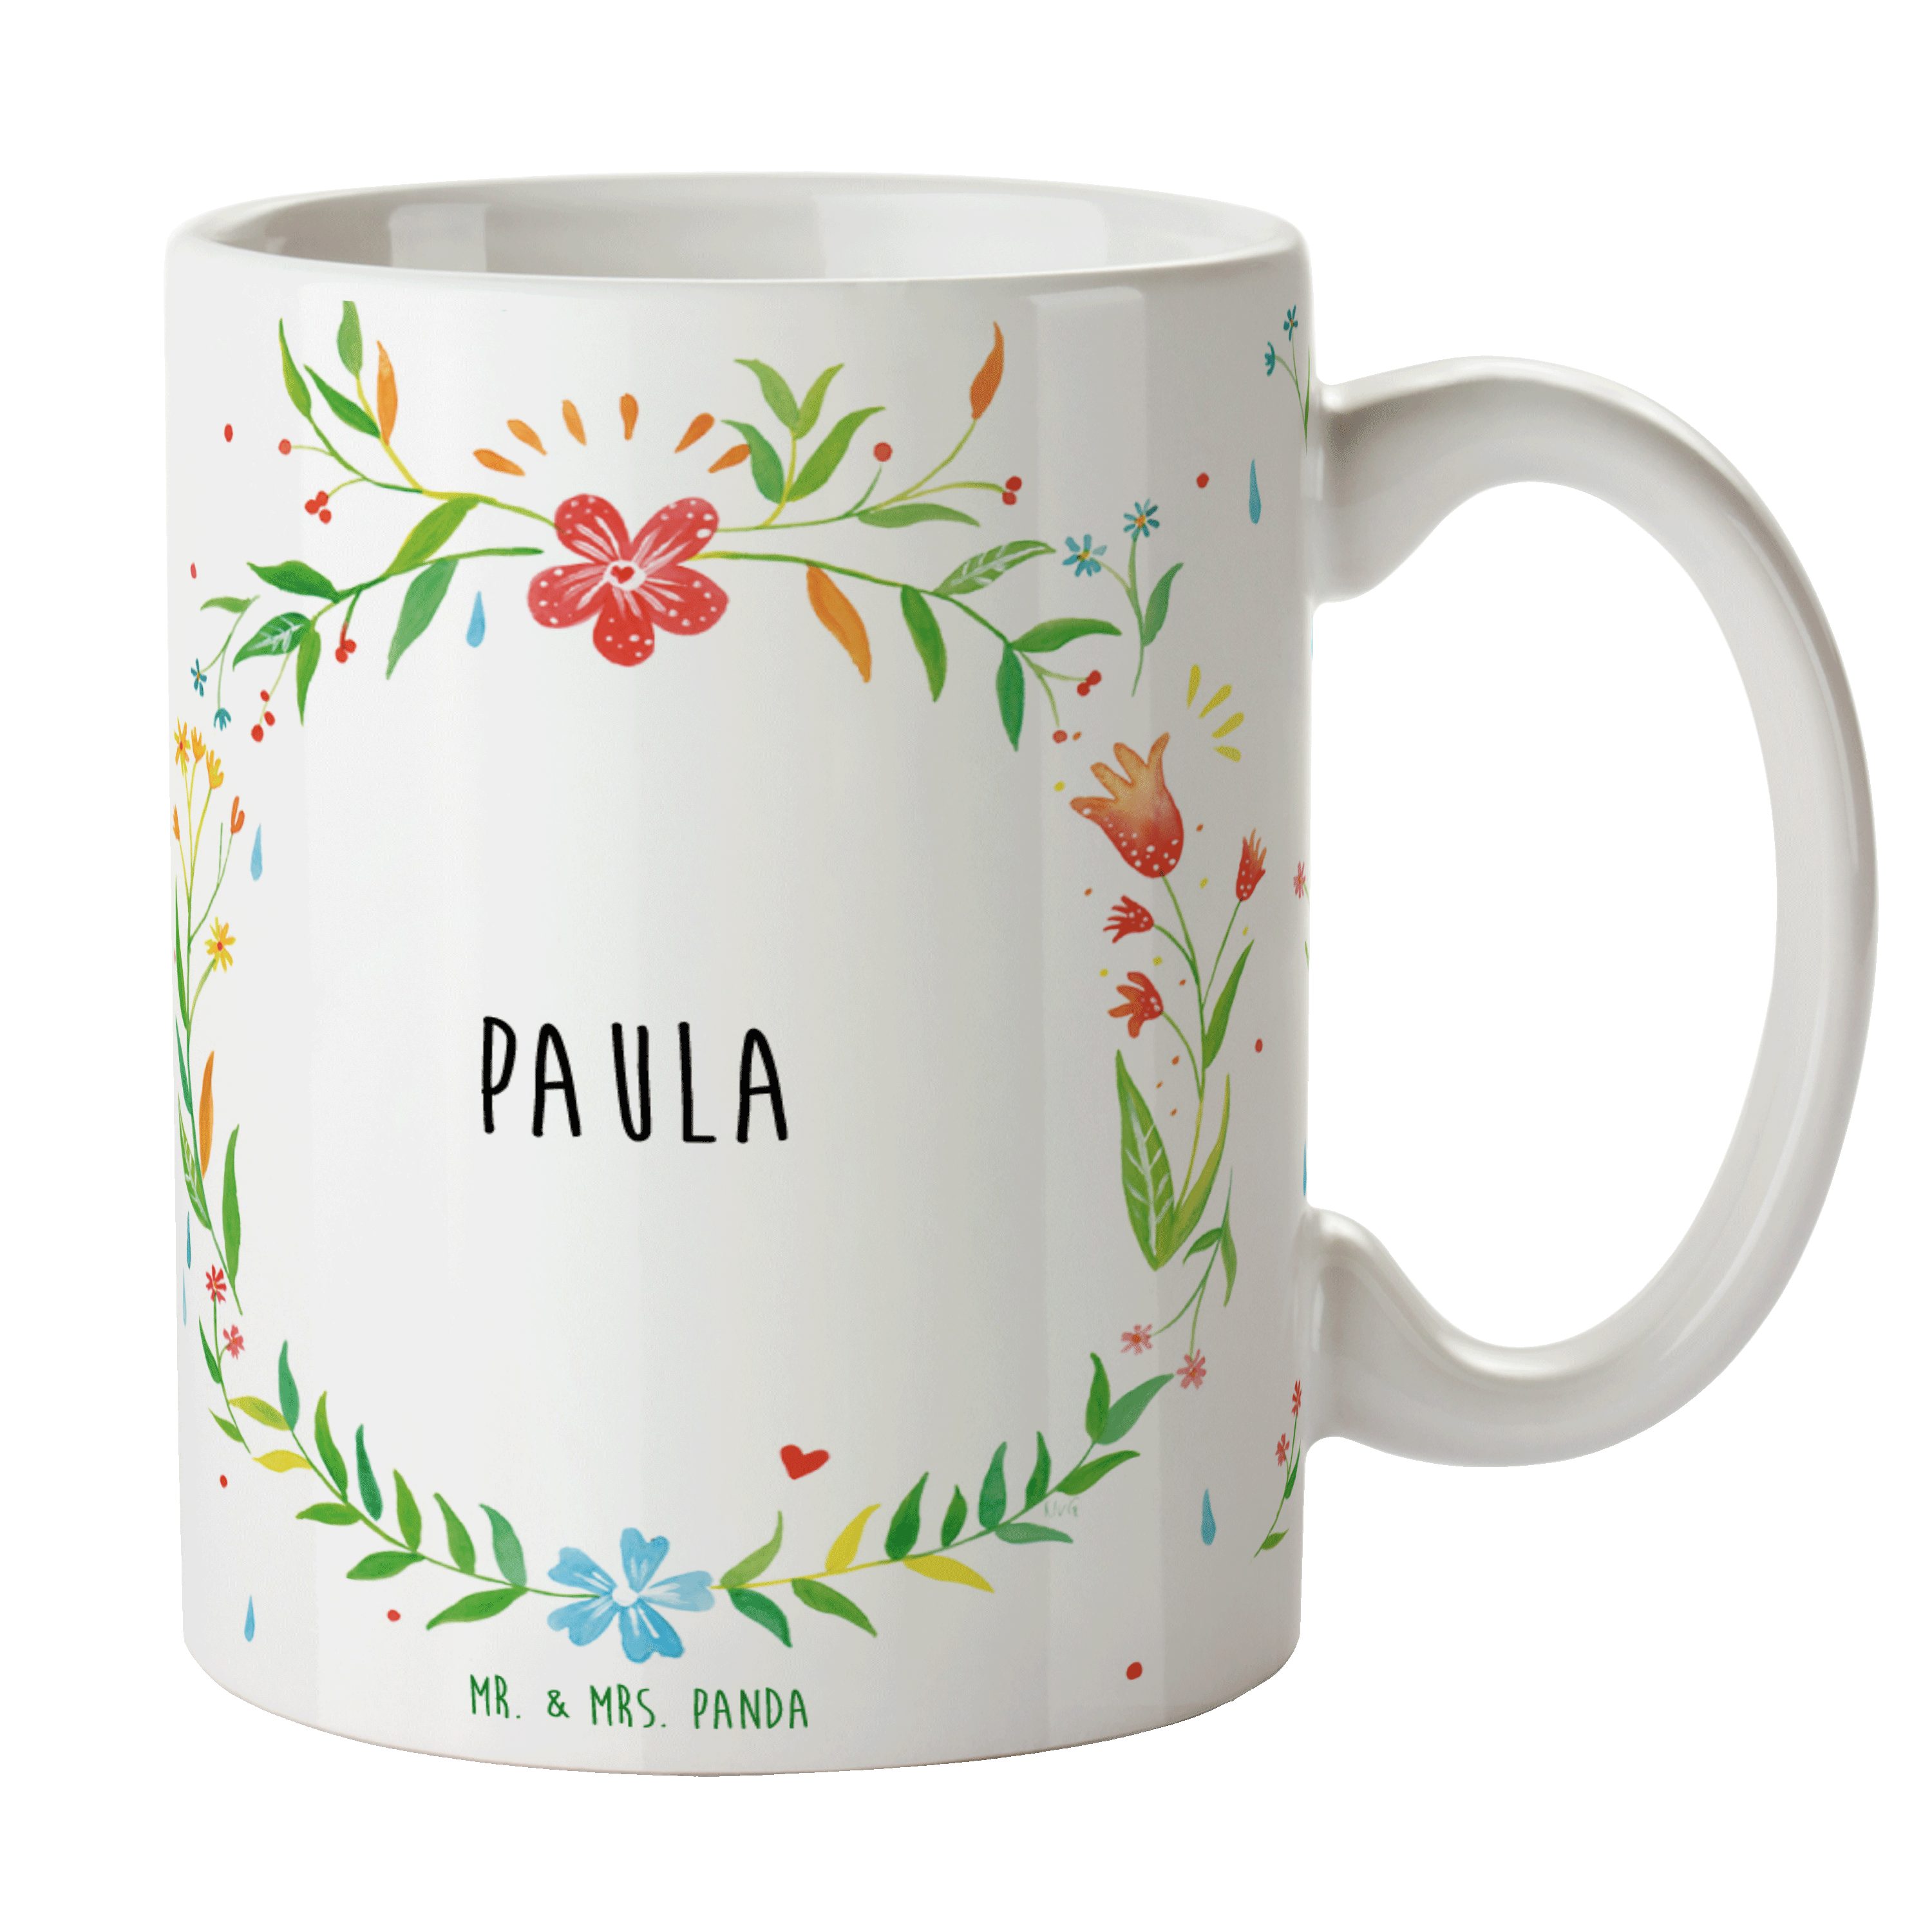 Mr. & Mrs. Panda Tasse Paula - Geschenk, Büro Tasse, Kaffeebecher, Tasse Motive, Porzellanta, Keramik